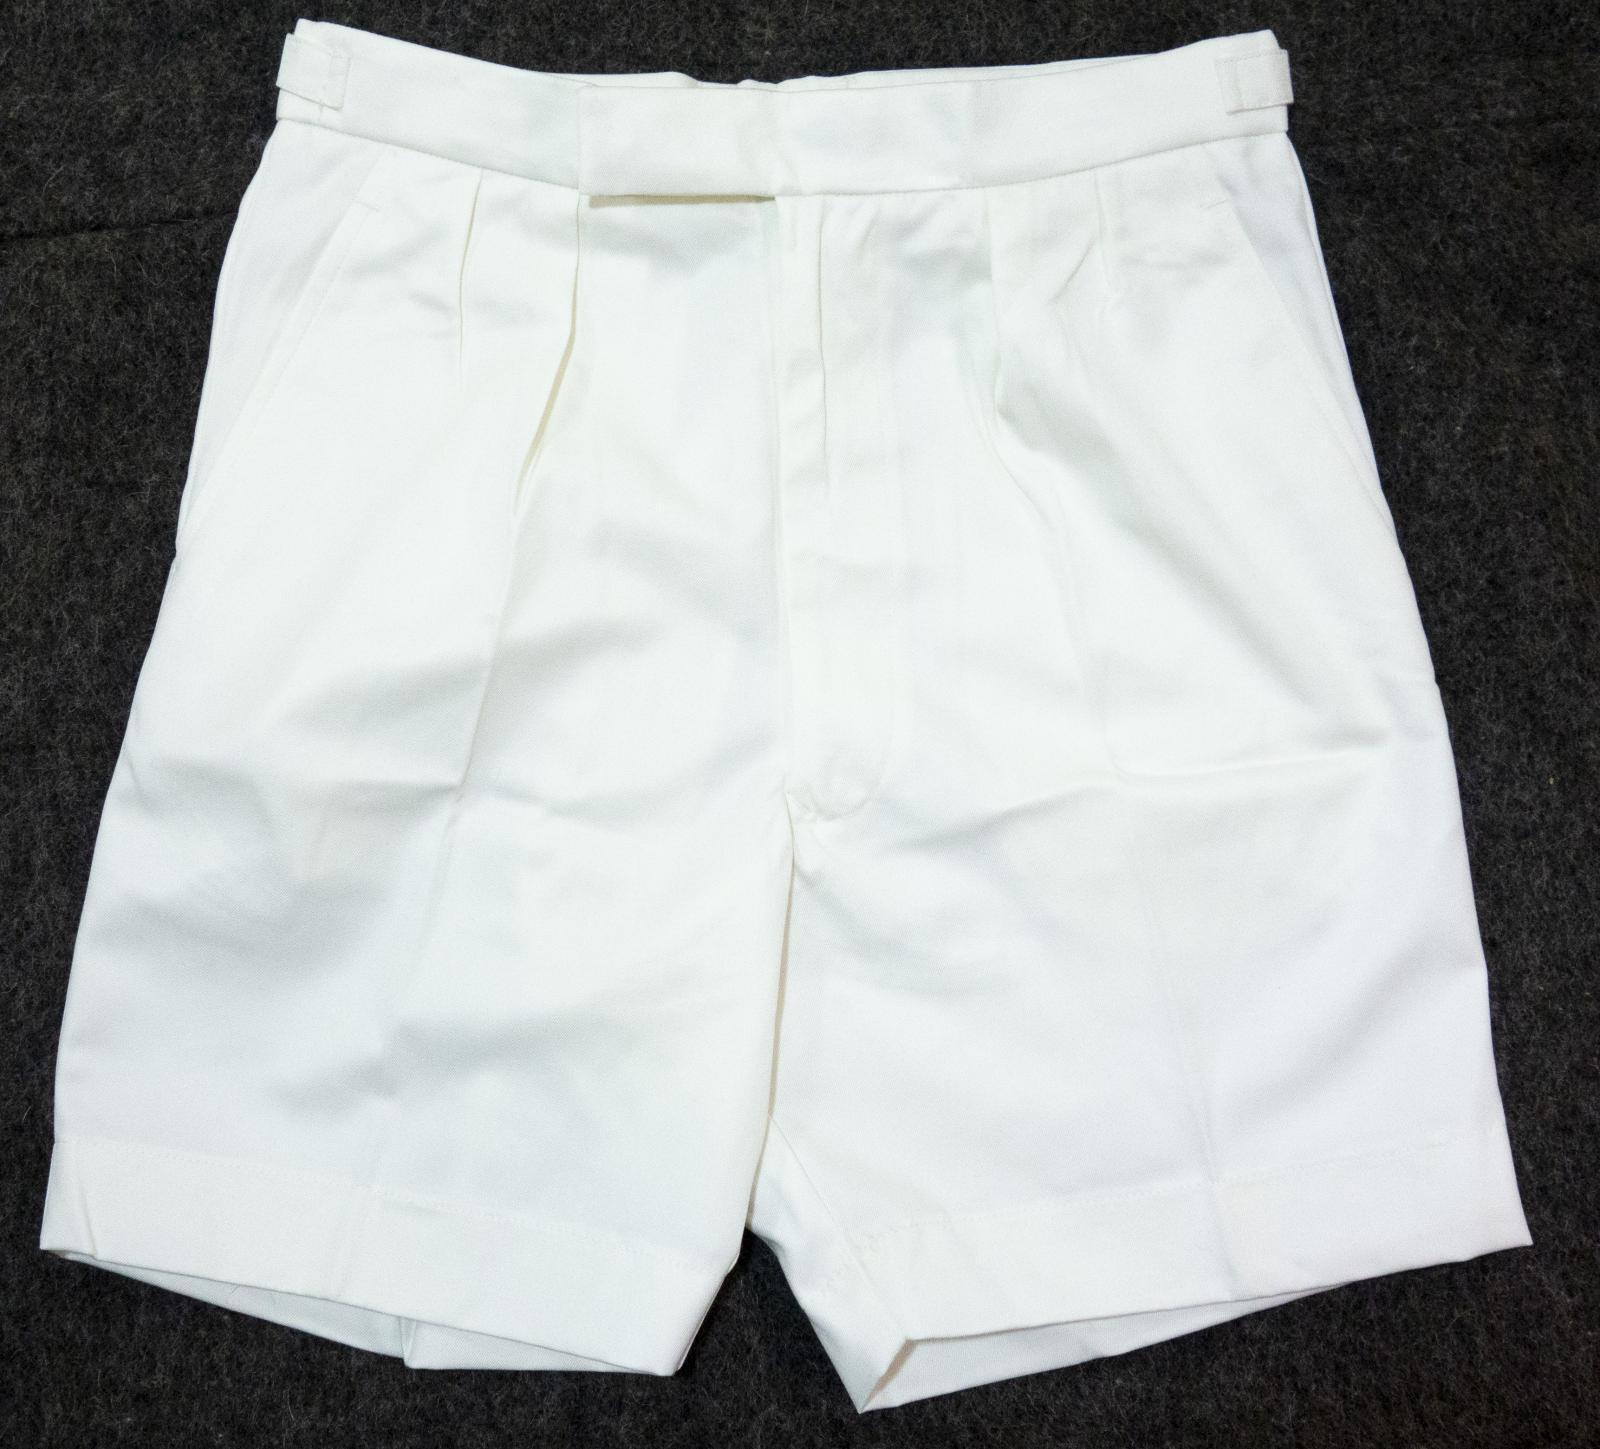 British Royal Navy surplus white shorts deck office BRAND NEW in bag ...